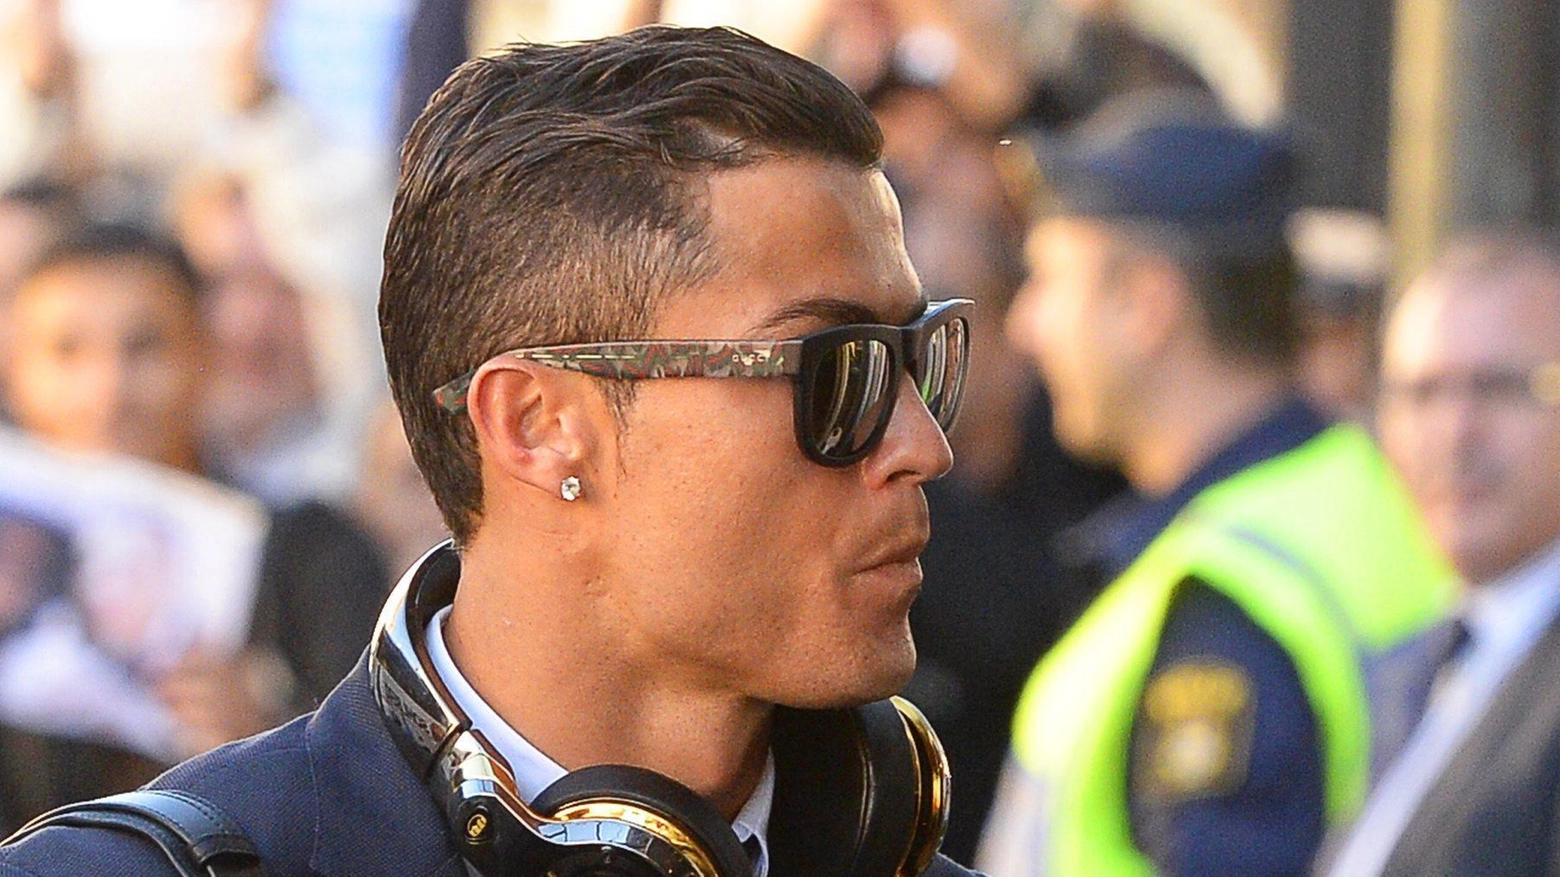 Cristiano Ronaldo (Ansa)